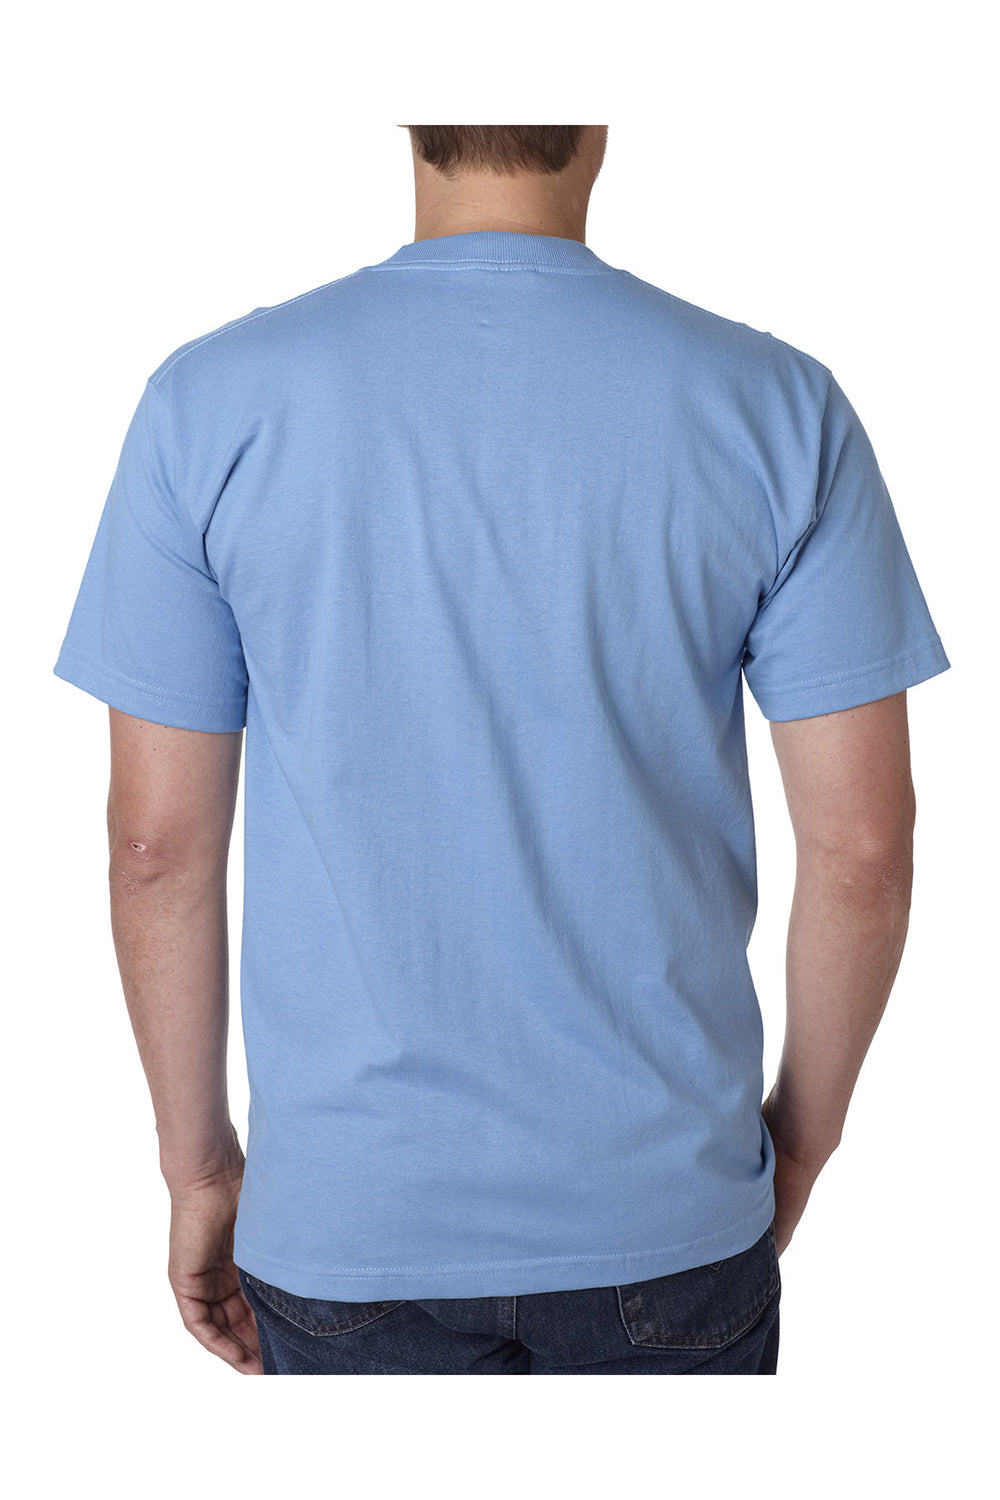 Bayside BA5100 Mens USA Made Short Sleeve Crewneck T-Shirt Carolina Blue Model Back